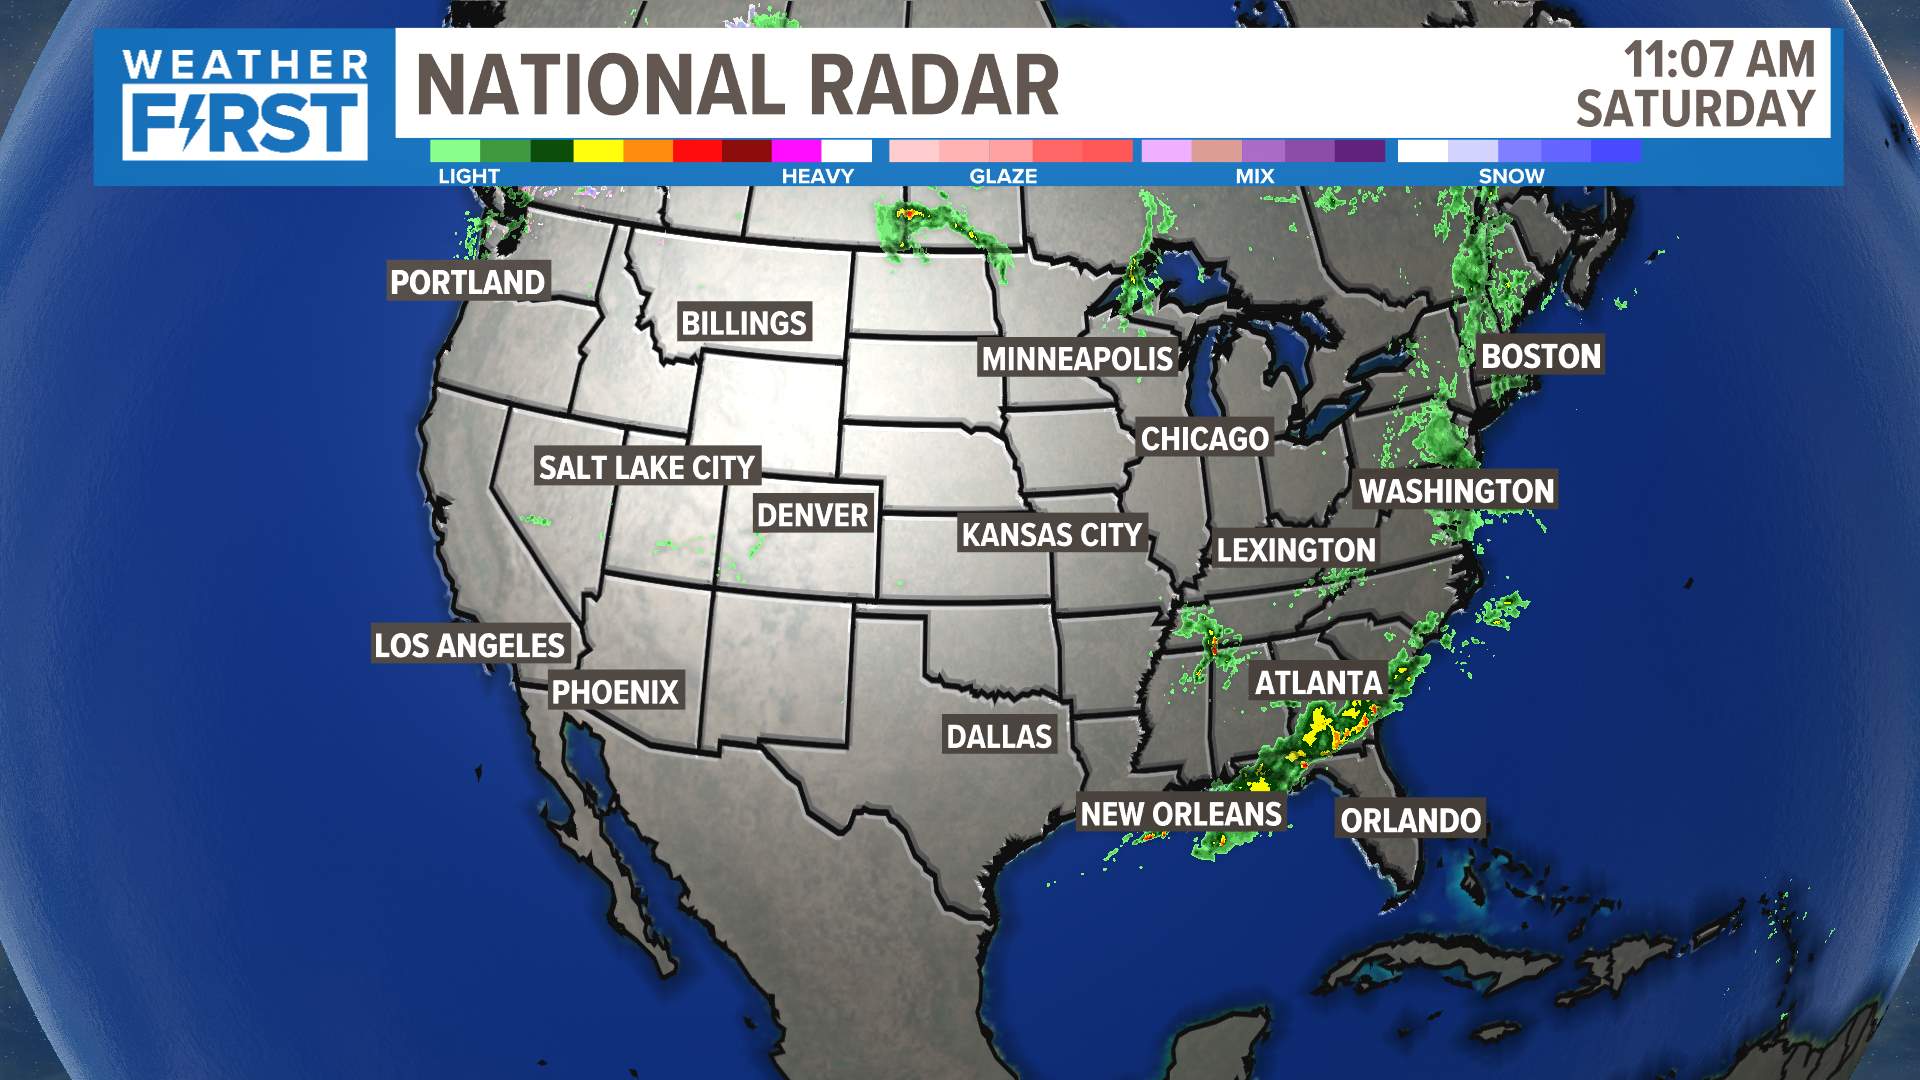 Weather Radar Today / Metro Interactive Radar on WFMY in Greensboro